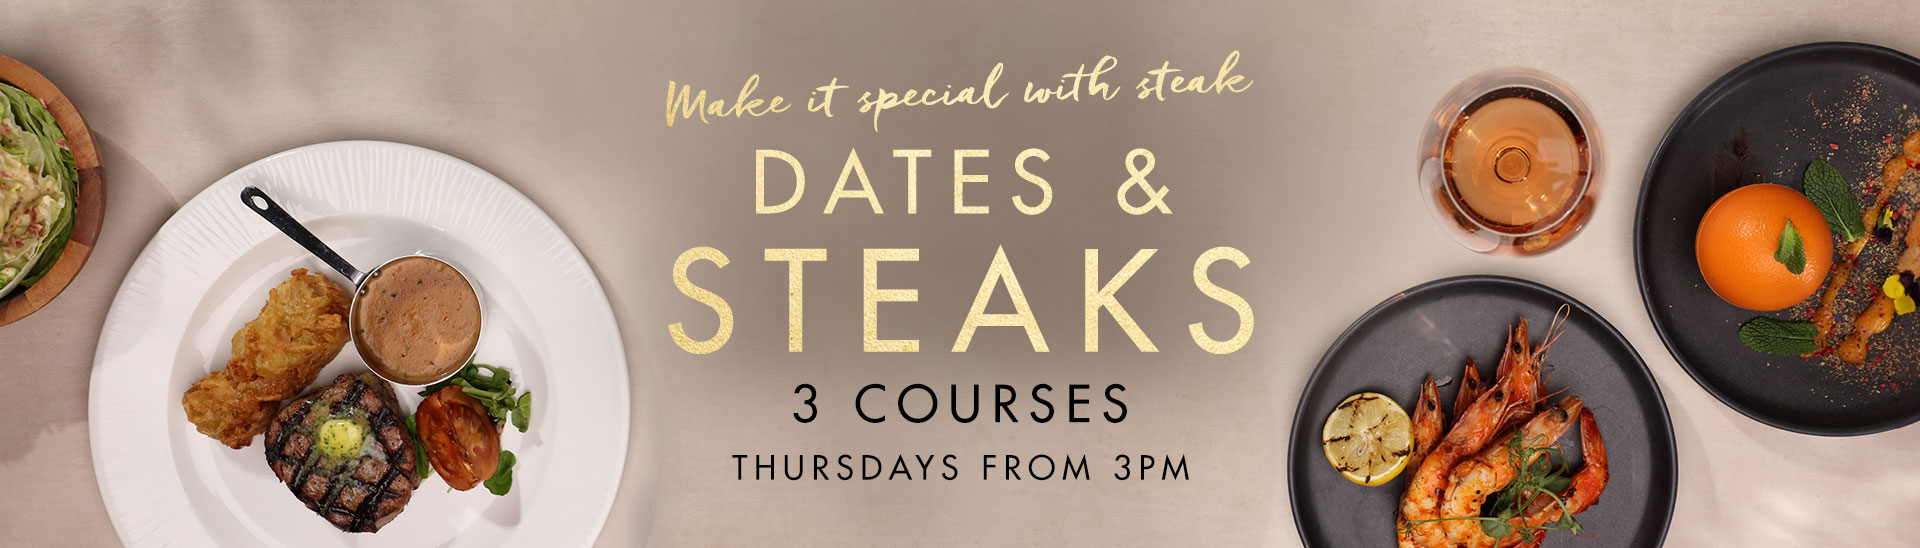 Dates & Steaks at Miller & Carter Crewe